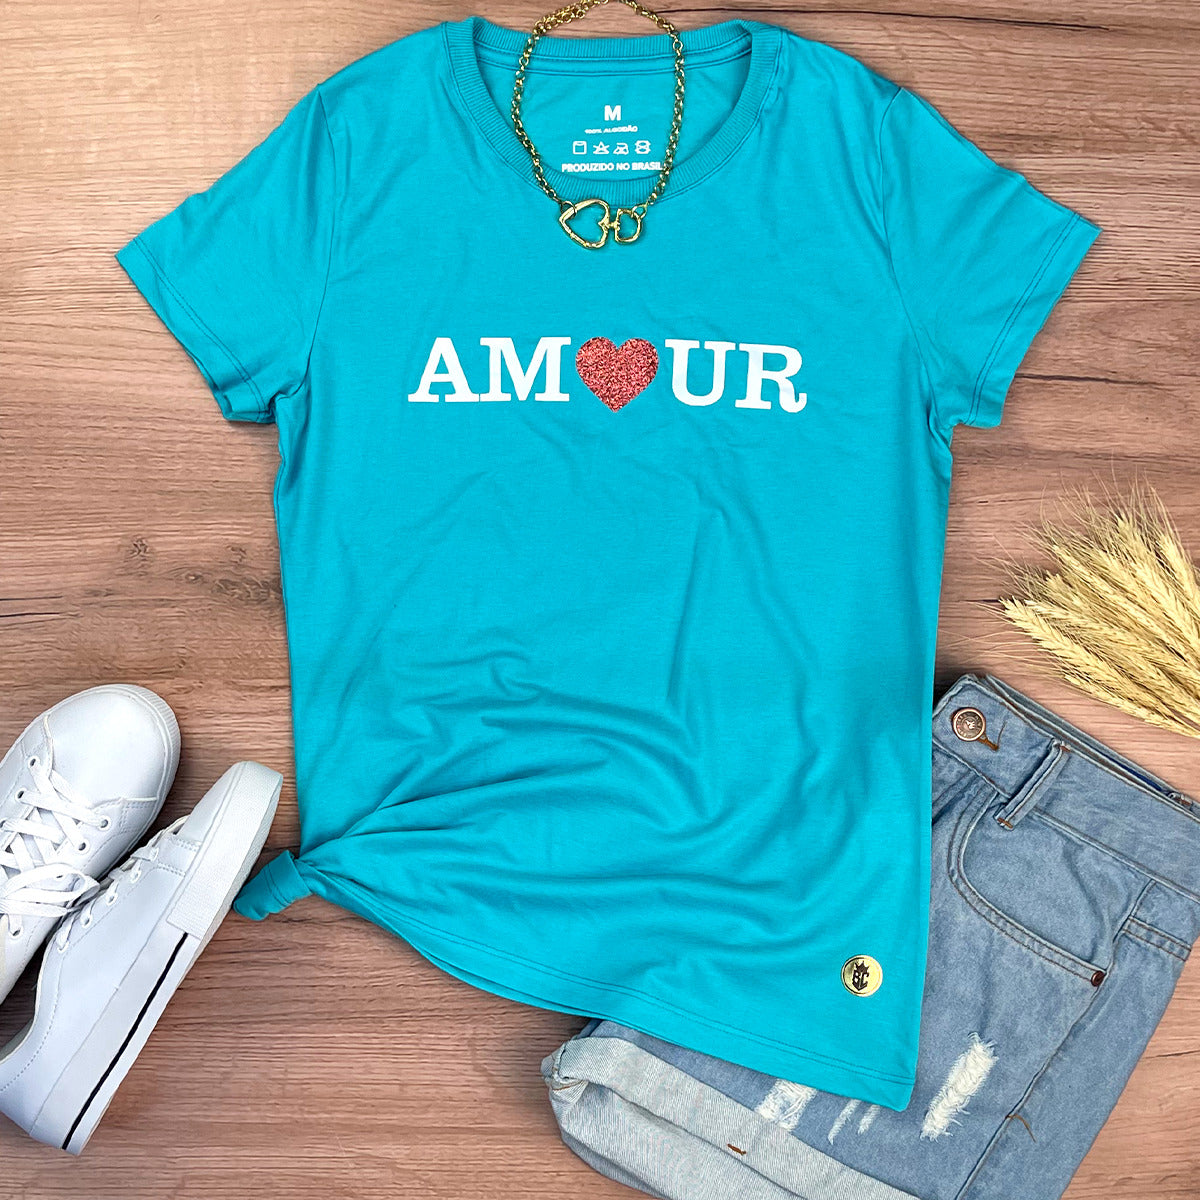 Camiseta Feminina Turquesa Amour